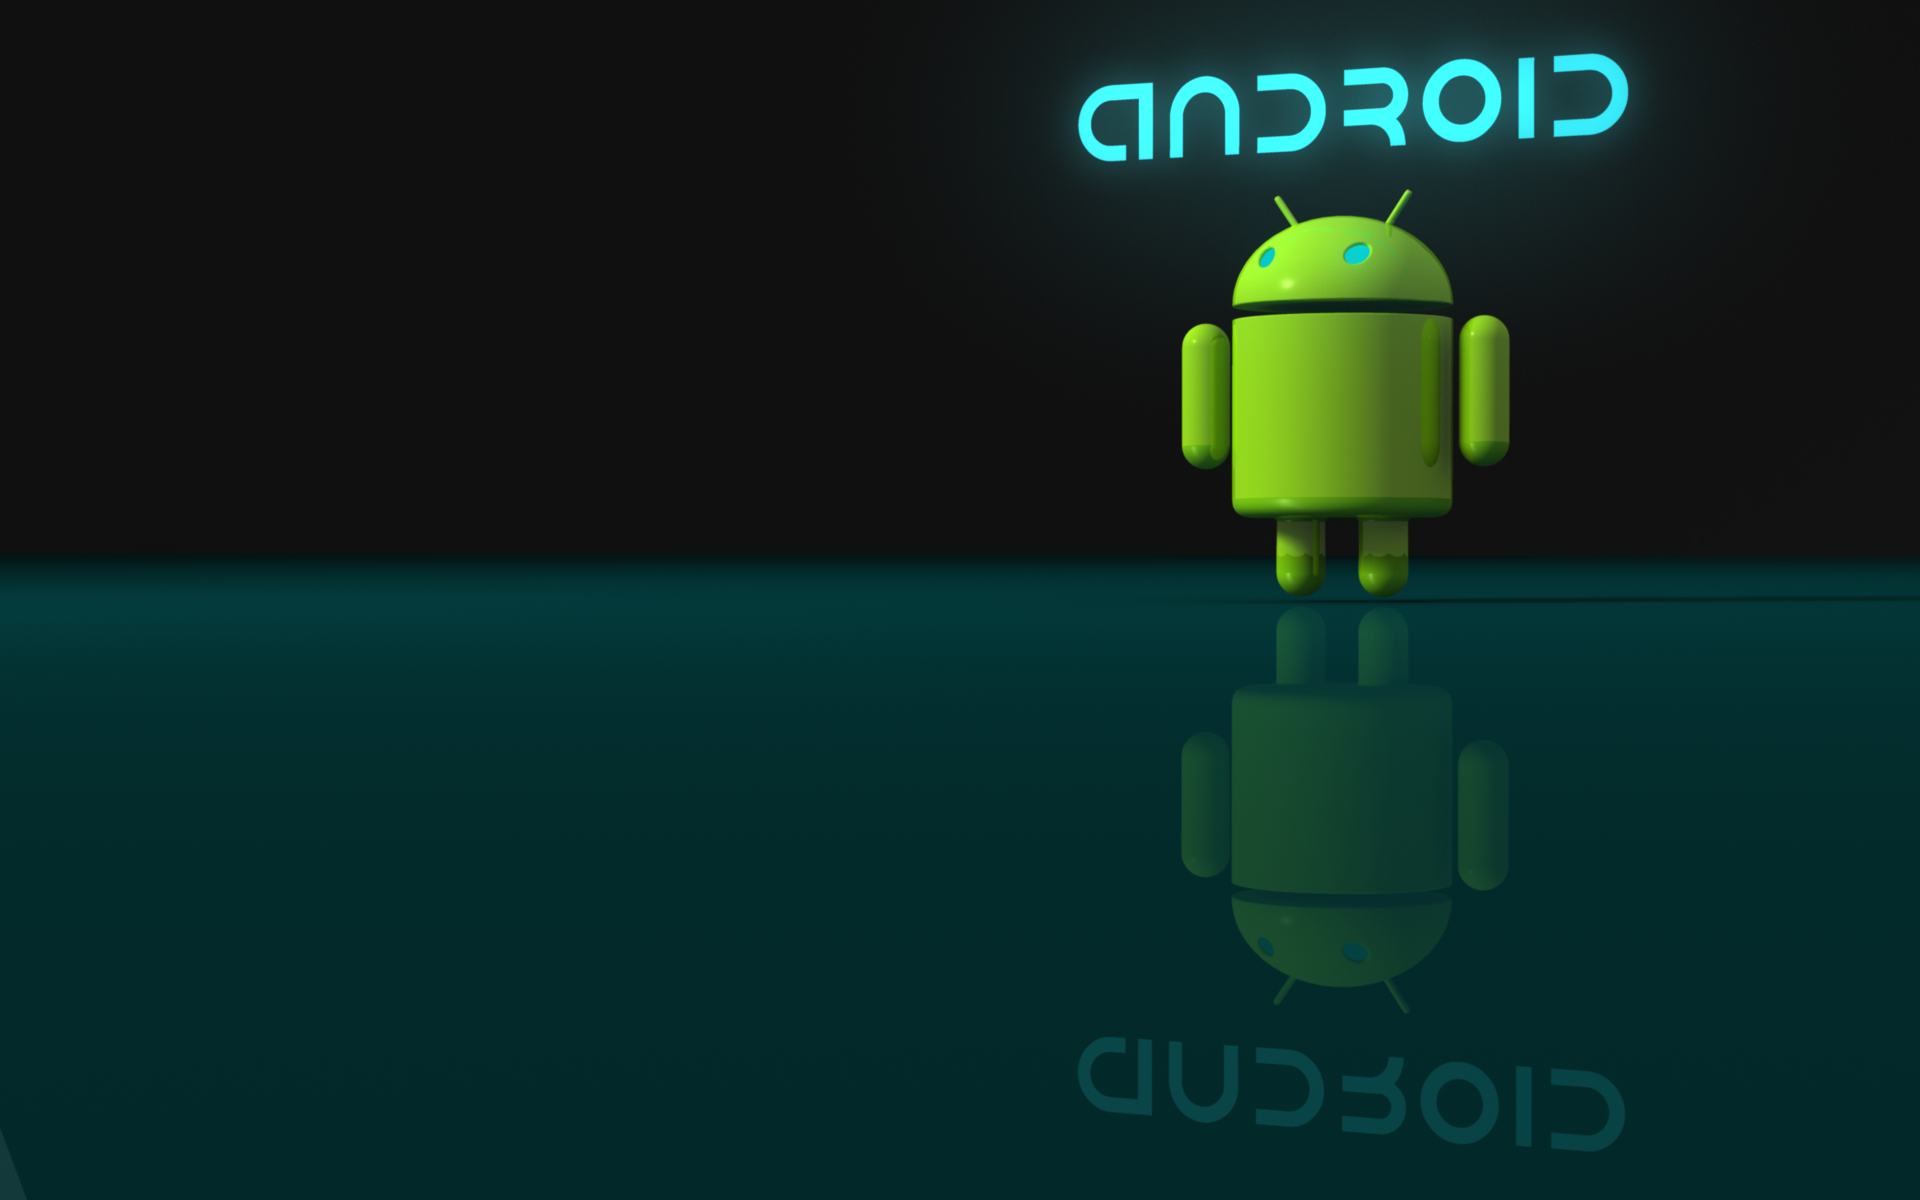 Wallpaper Logo Android 3d Image Num 37